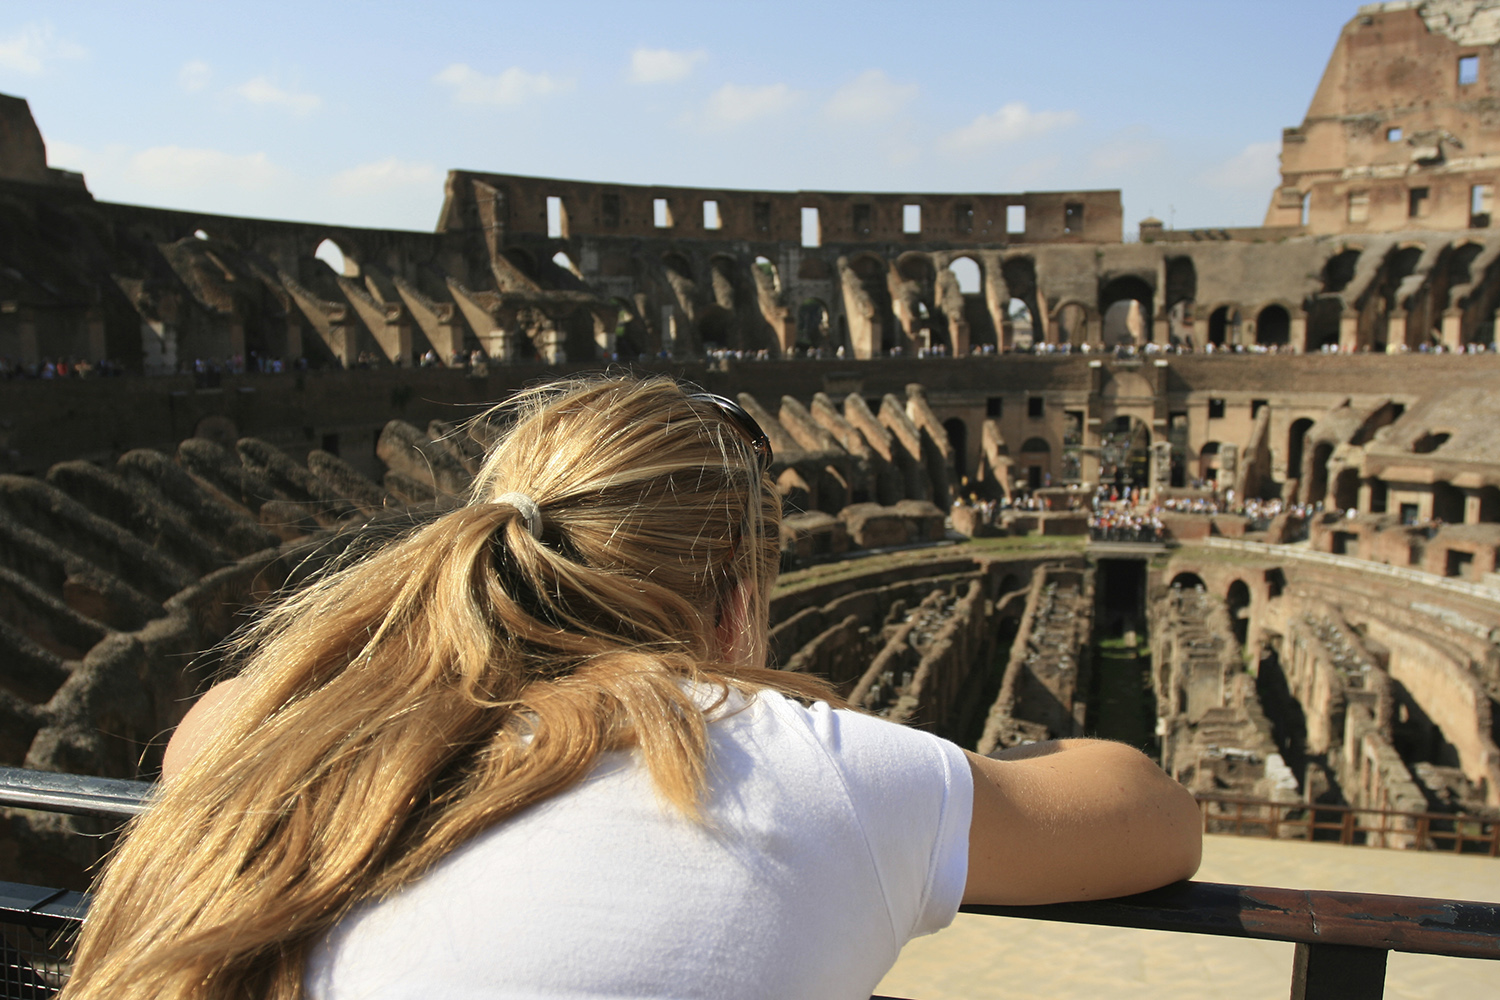 The grandeur of Rome appeals to older children. Image by Hedda Gjerpen / E+ / Getty Images